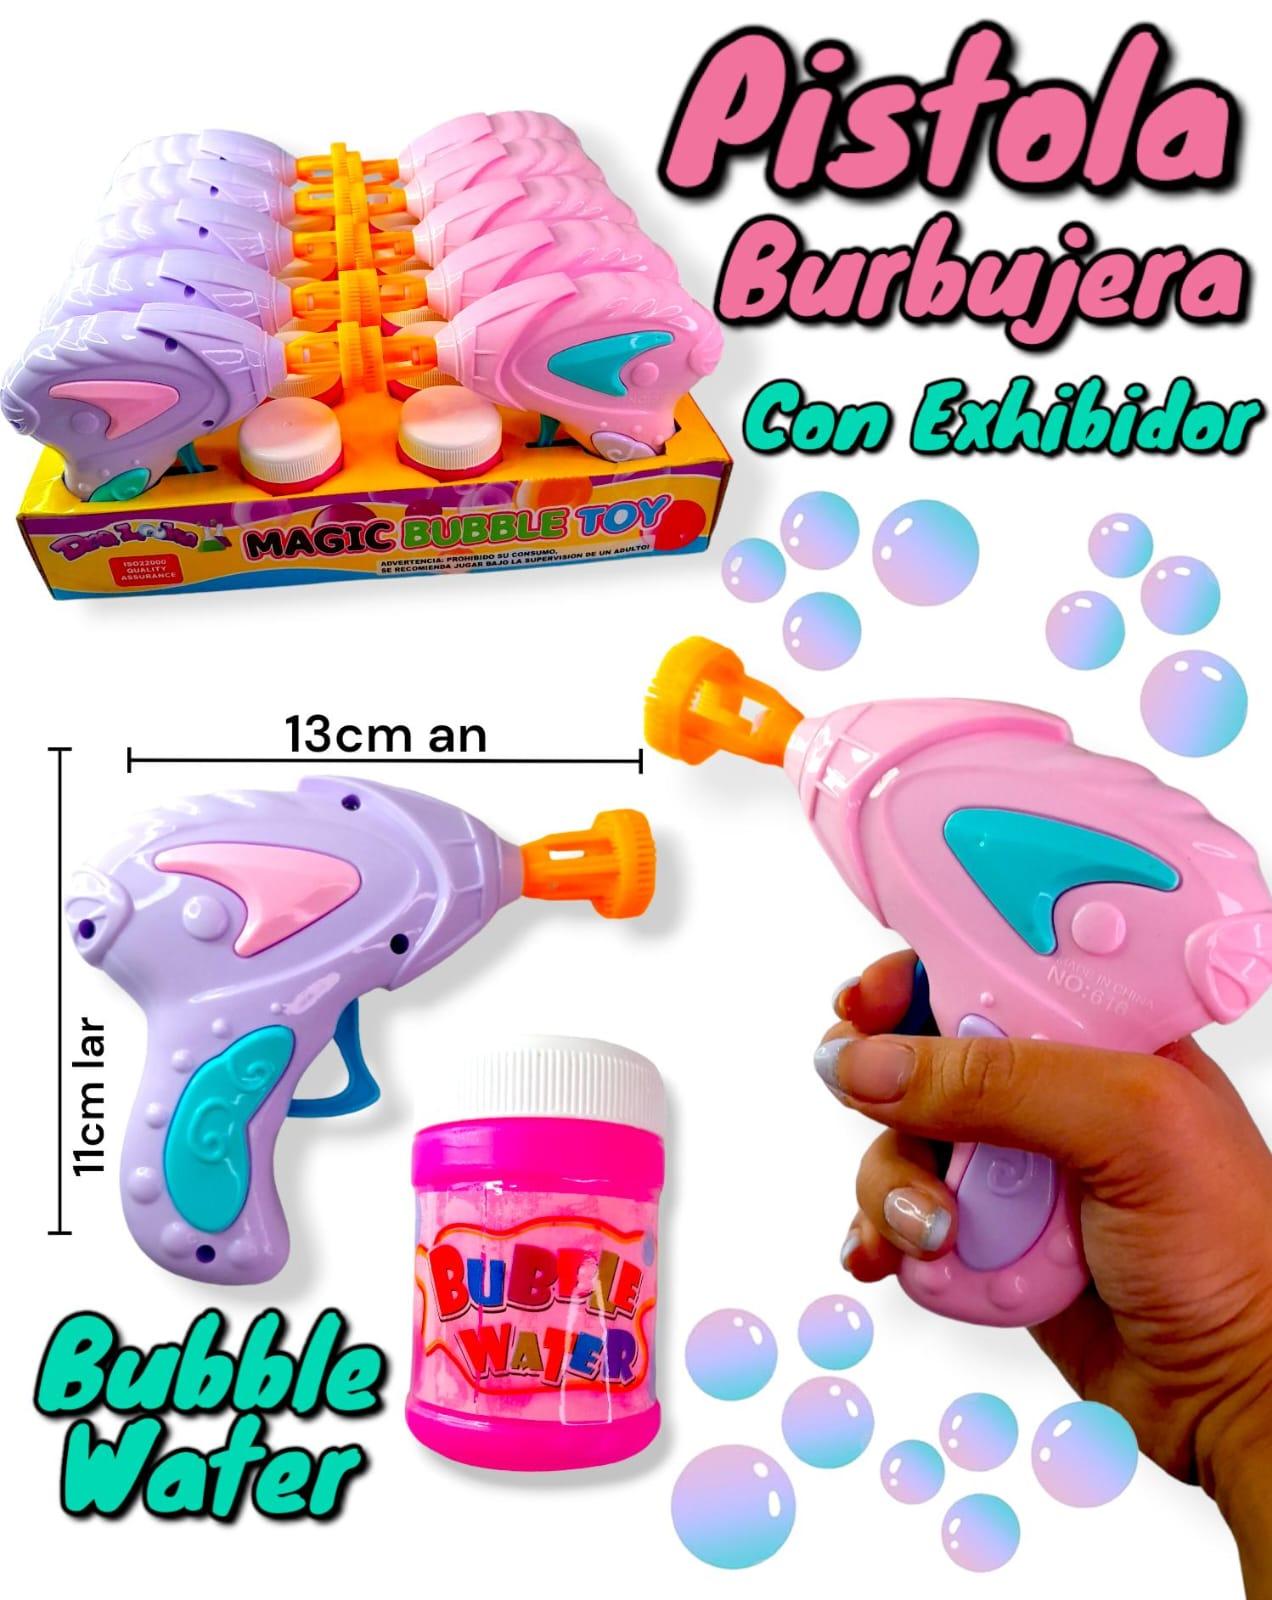 Burbujero Magic Bubble Toy Con Exhibidor 